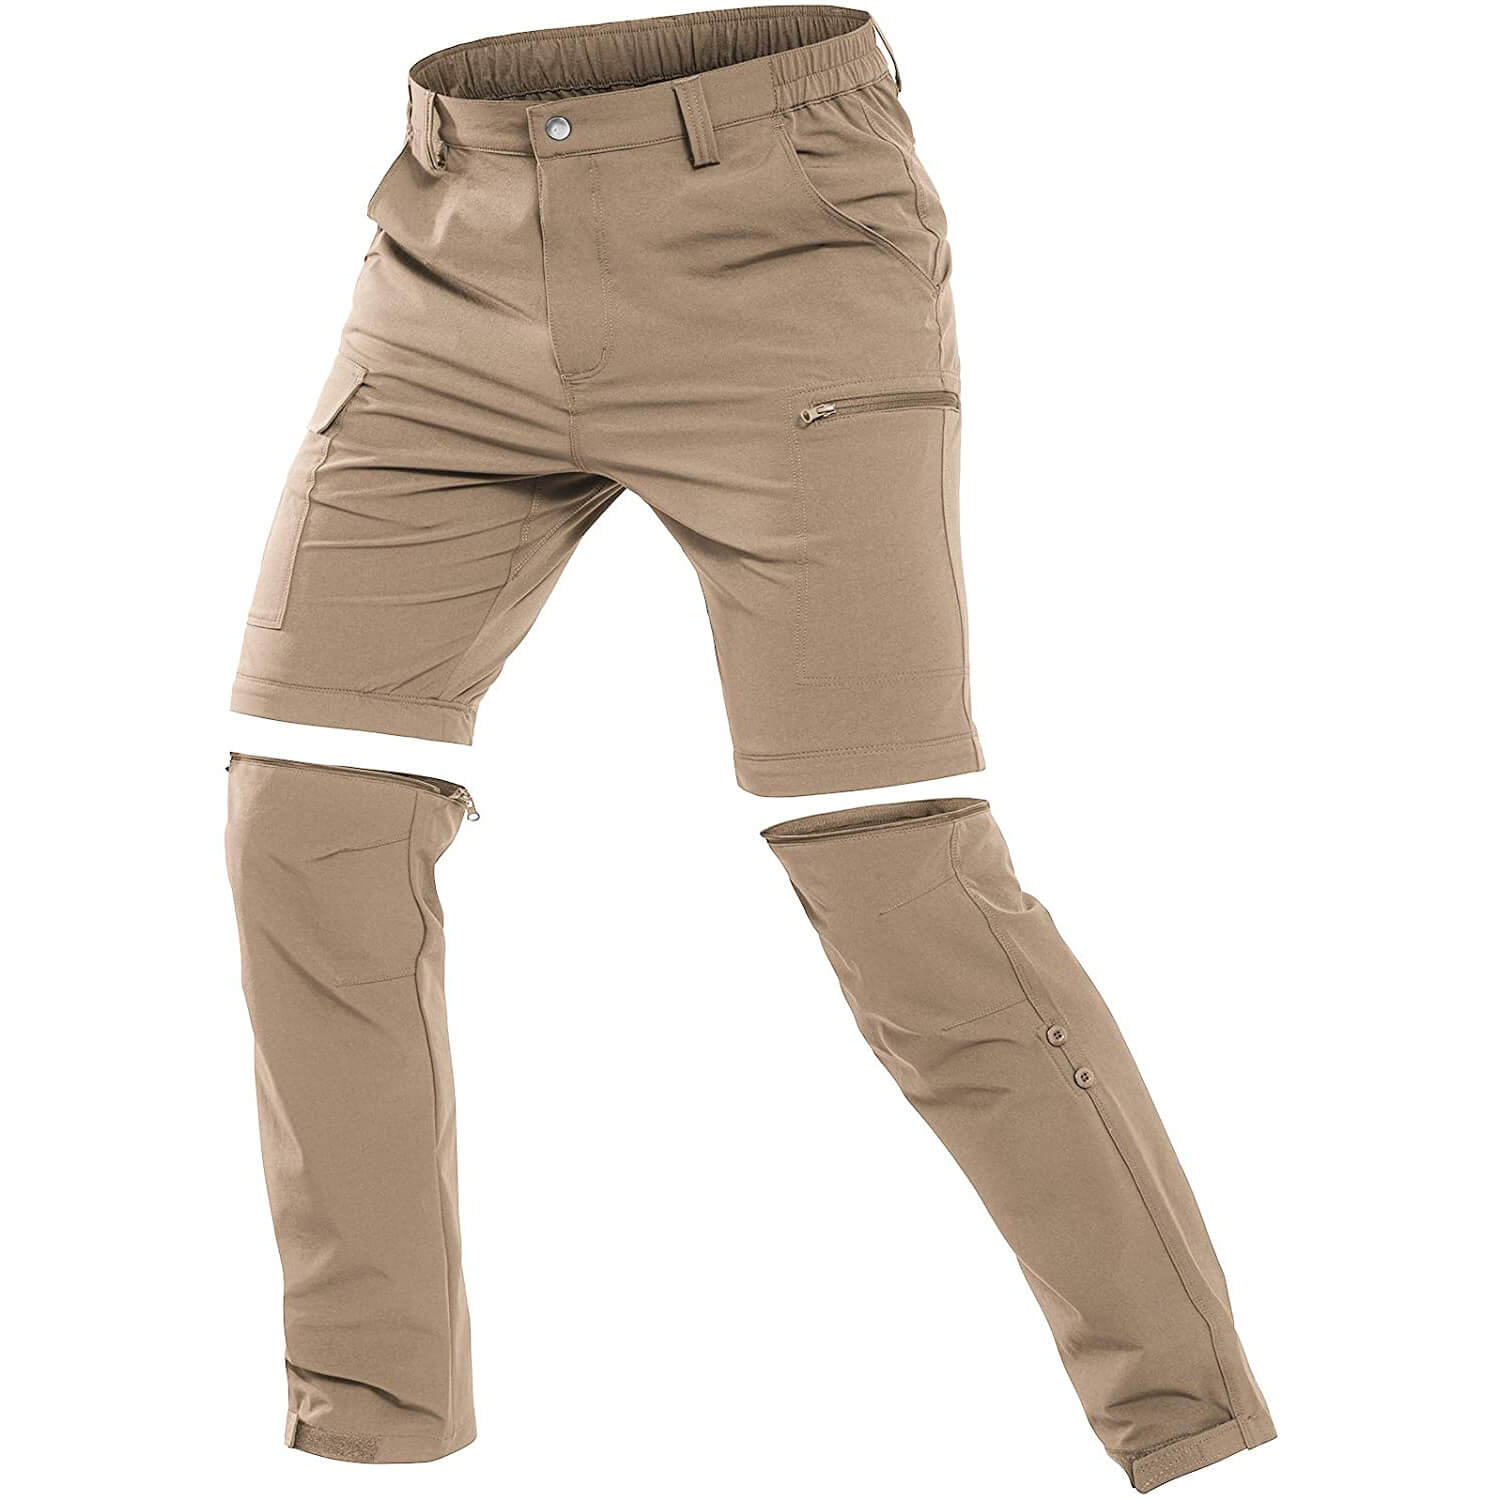  Cycorld Women's-Hiking-Pants-Convertible Quick-Dry